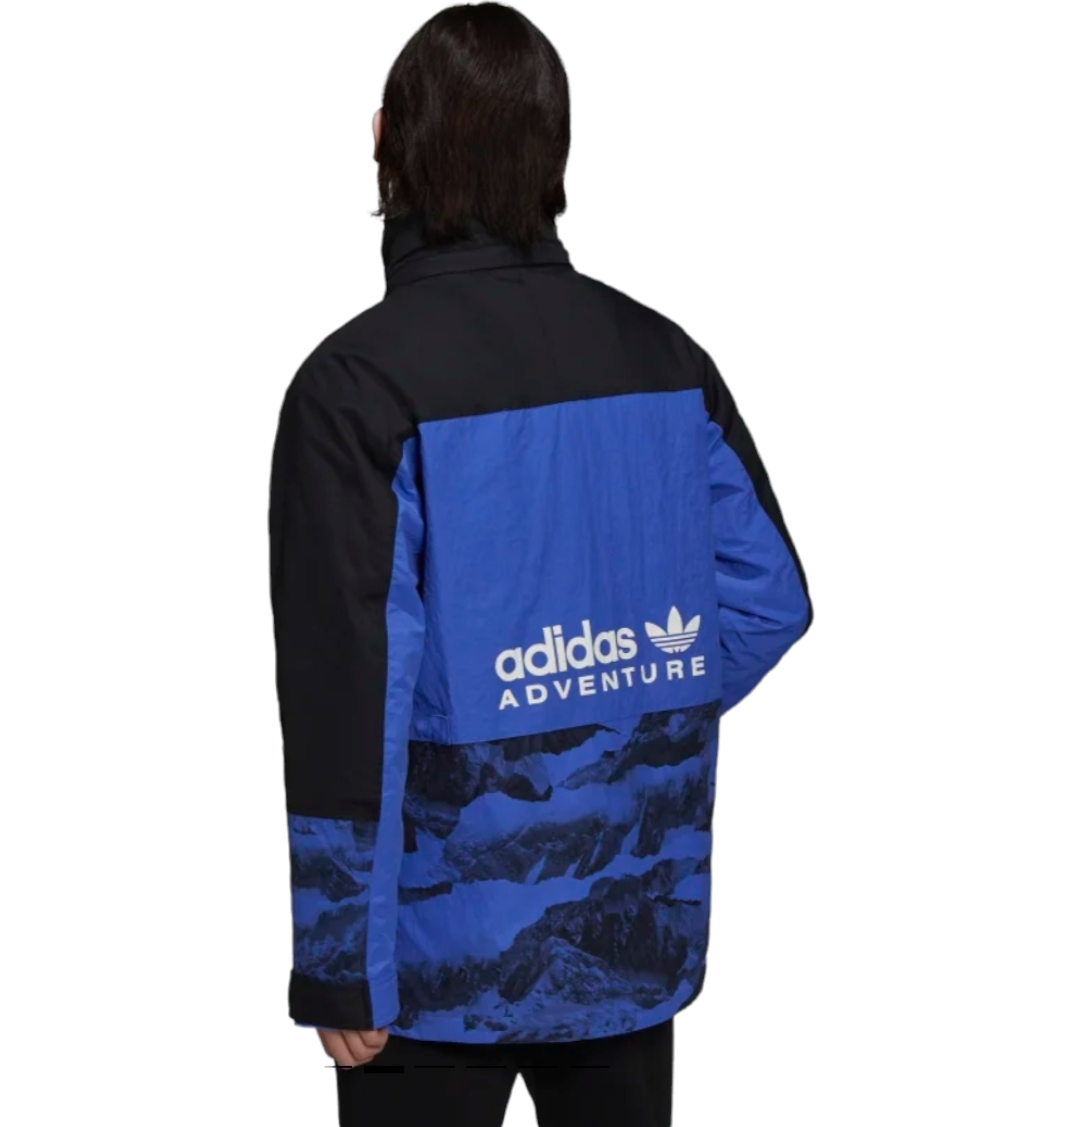 Adidas Adventure Allover Print Jacket